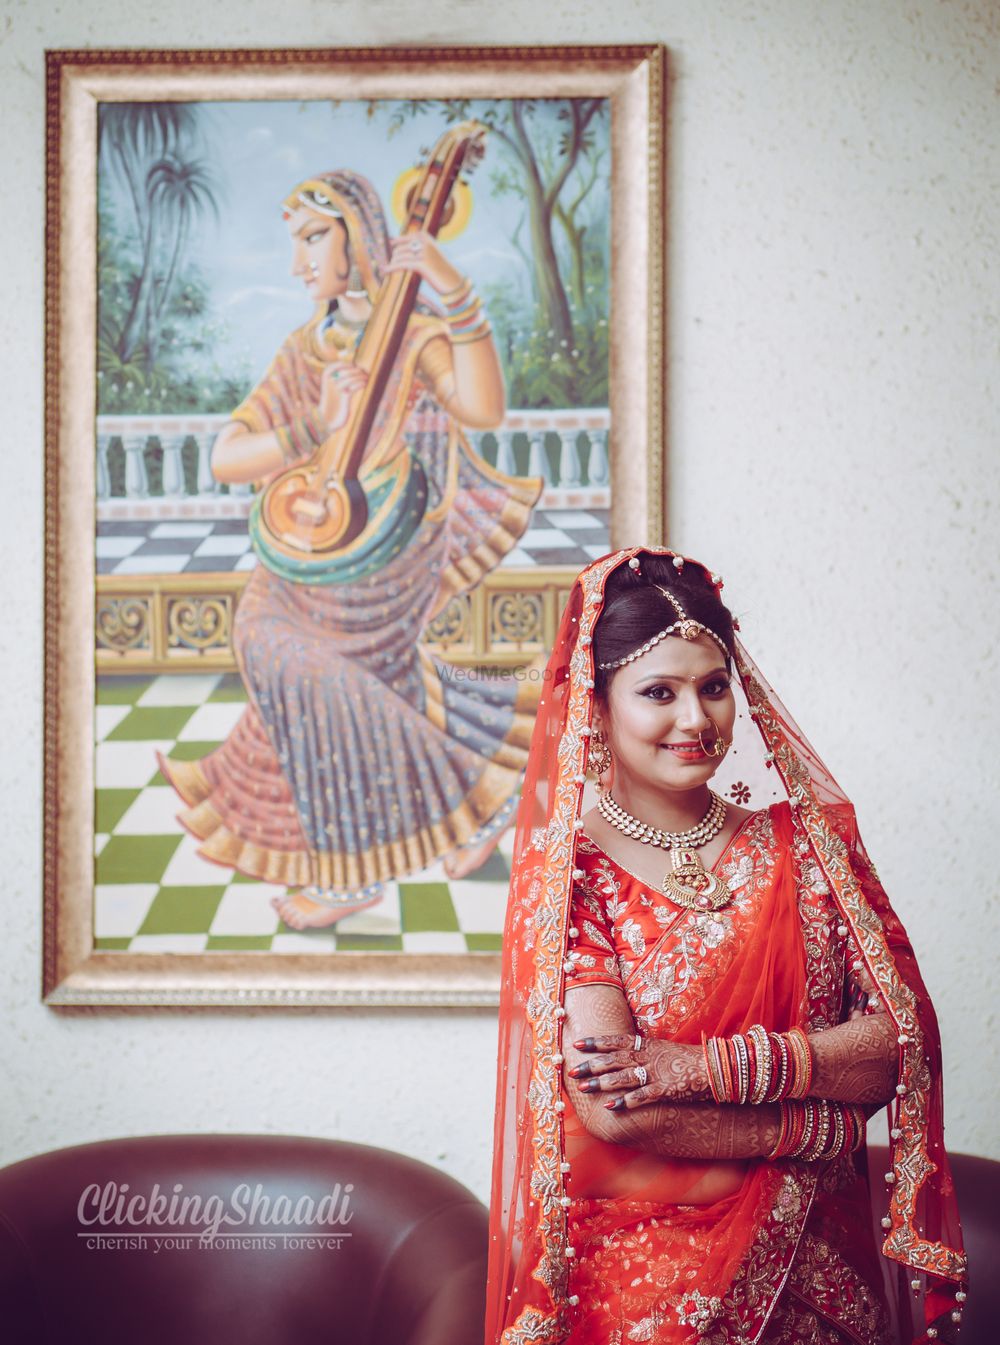 Photo From Priyanka Weds Vivek - By Clicking Shaadi